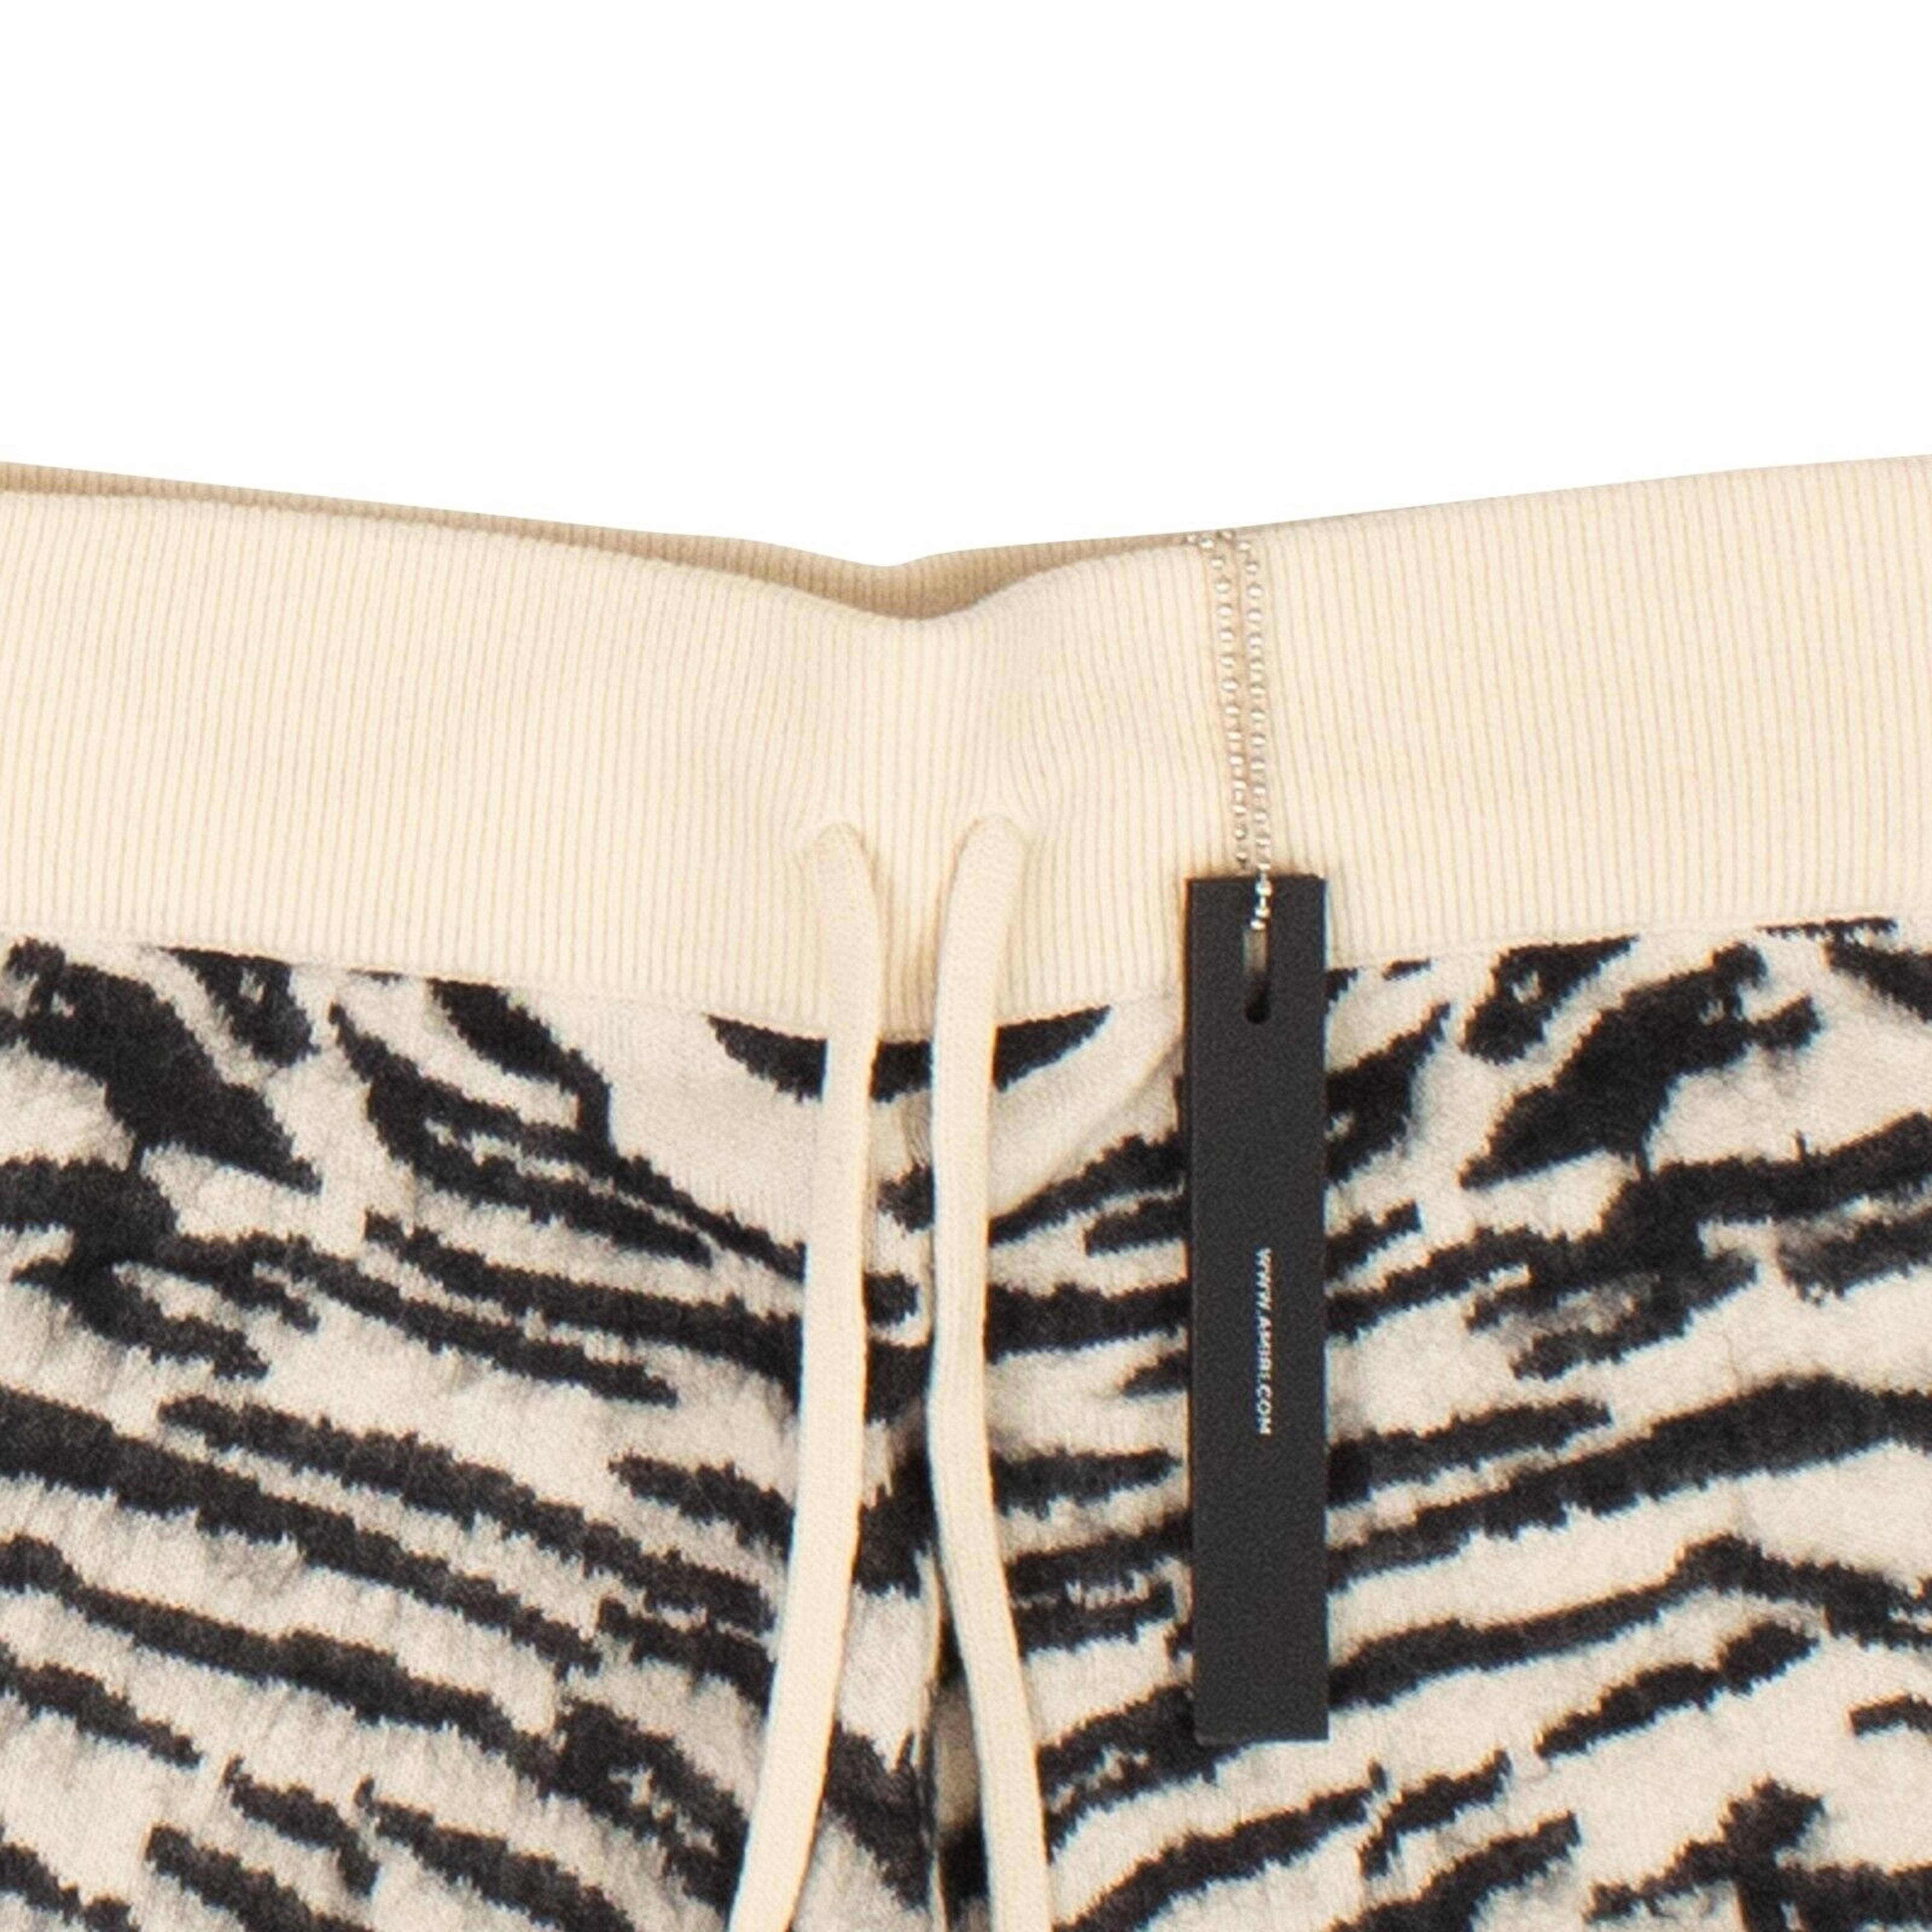 Alternate View 2 of Zebra Animal Jacquard Shorts